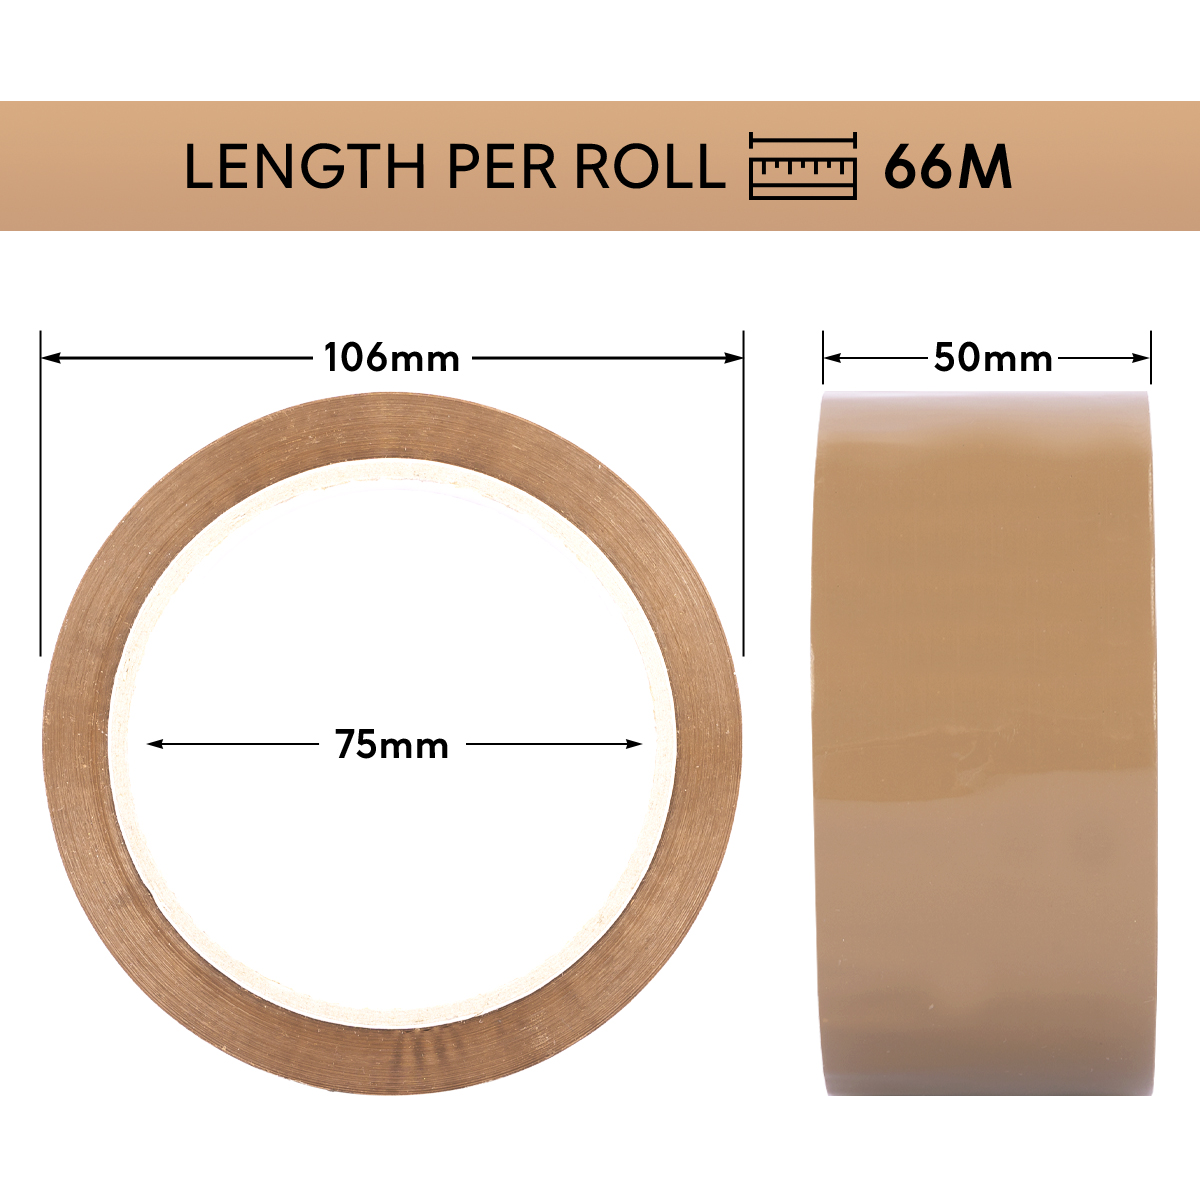 Adhesive tape pp 66m x 50mm standard unrolling Brown